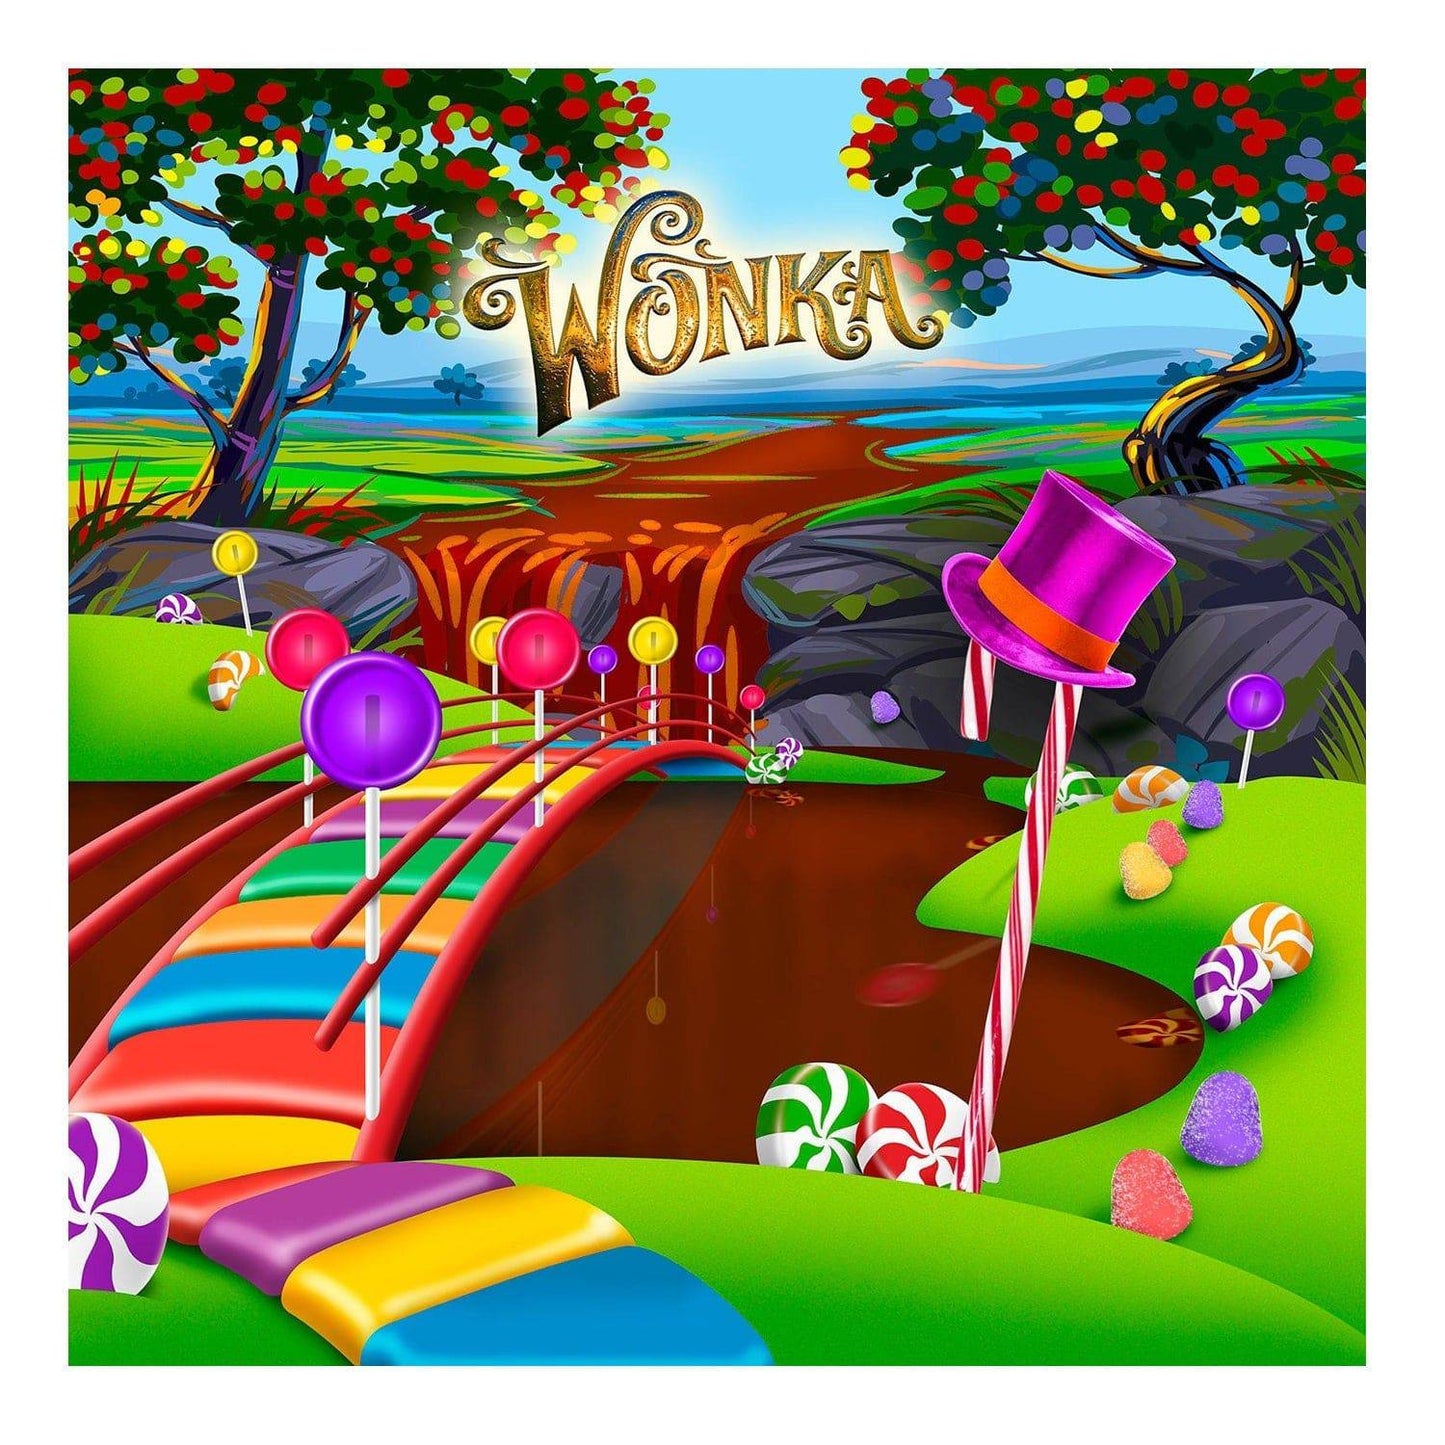 Wonka Candyland Backdrop Photo Backdrop, Backgrounds or Banners - Pro 8  x 8  